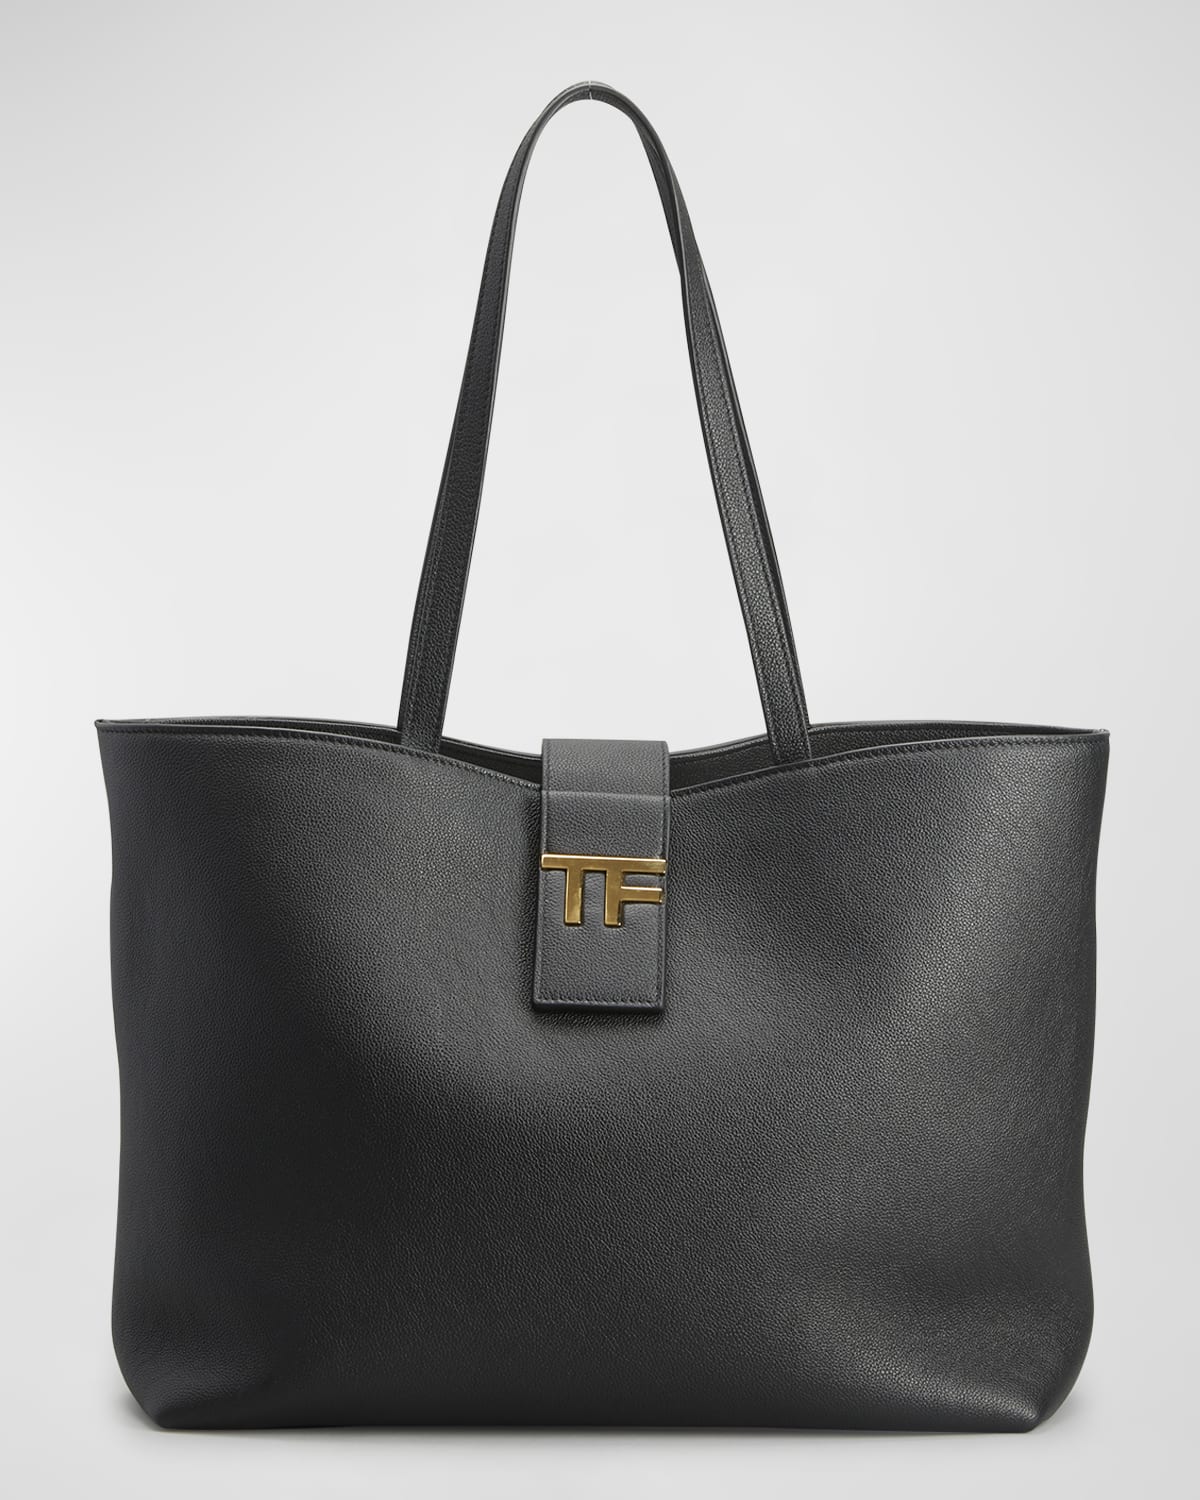 TOM FORD Tara Medium Leather Saddle Crossbody Bag | Neiman Marcus